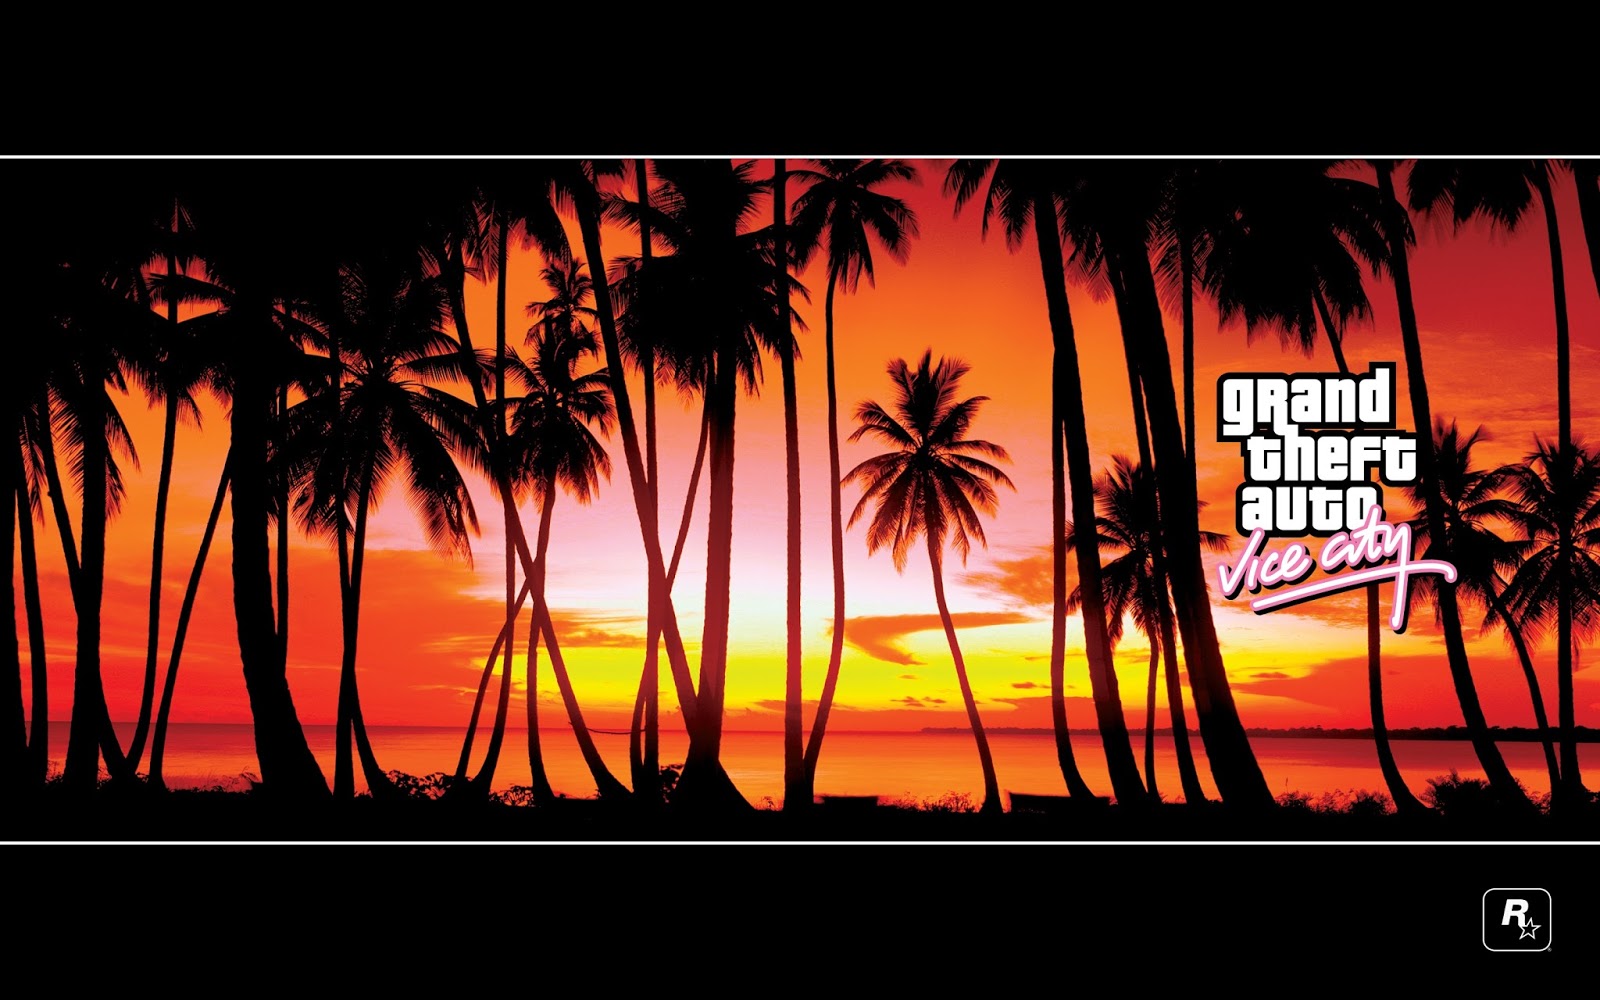 Grand Theft Auto Vice City Free Download PC Game - Tech Kashif